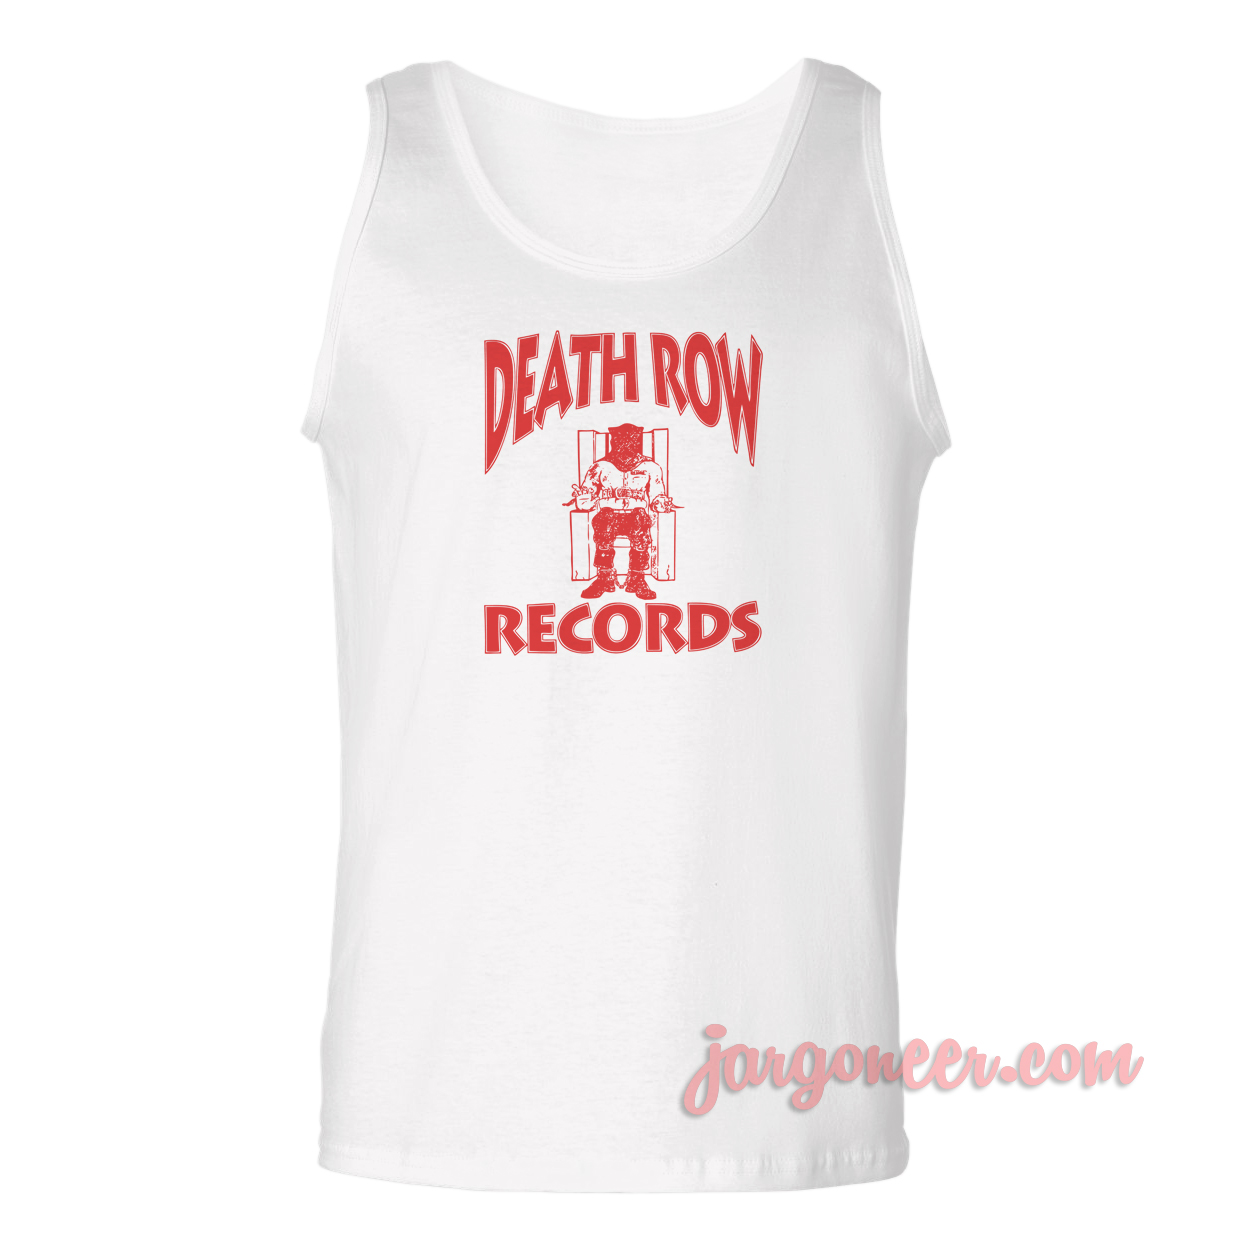 Death Row Record - Shop Unique Graphic Cool Shirt Designs